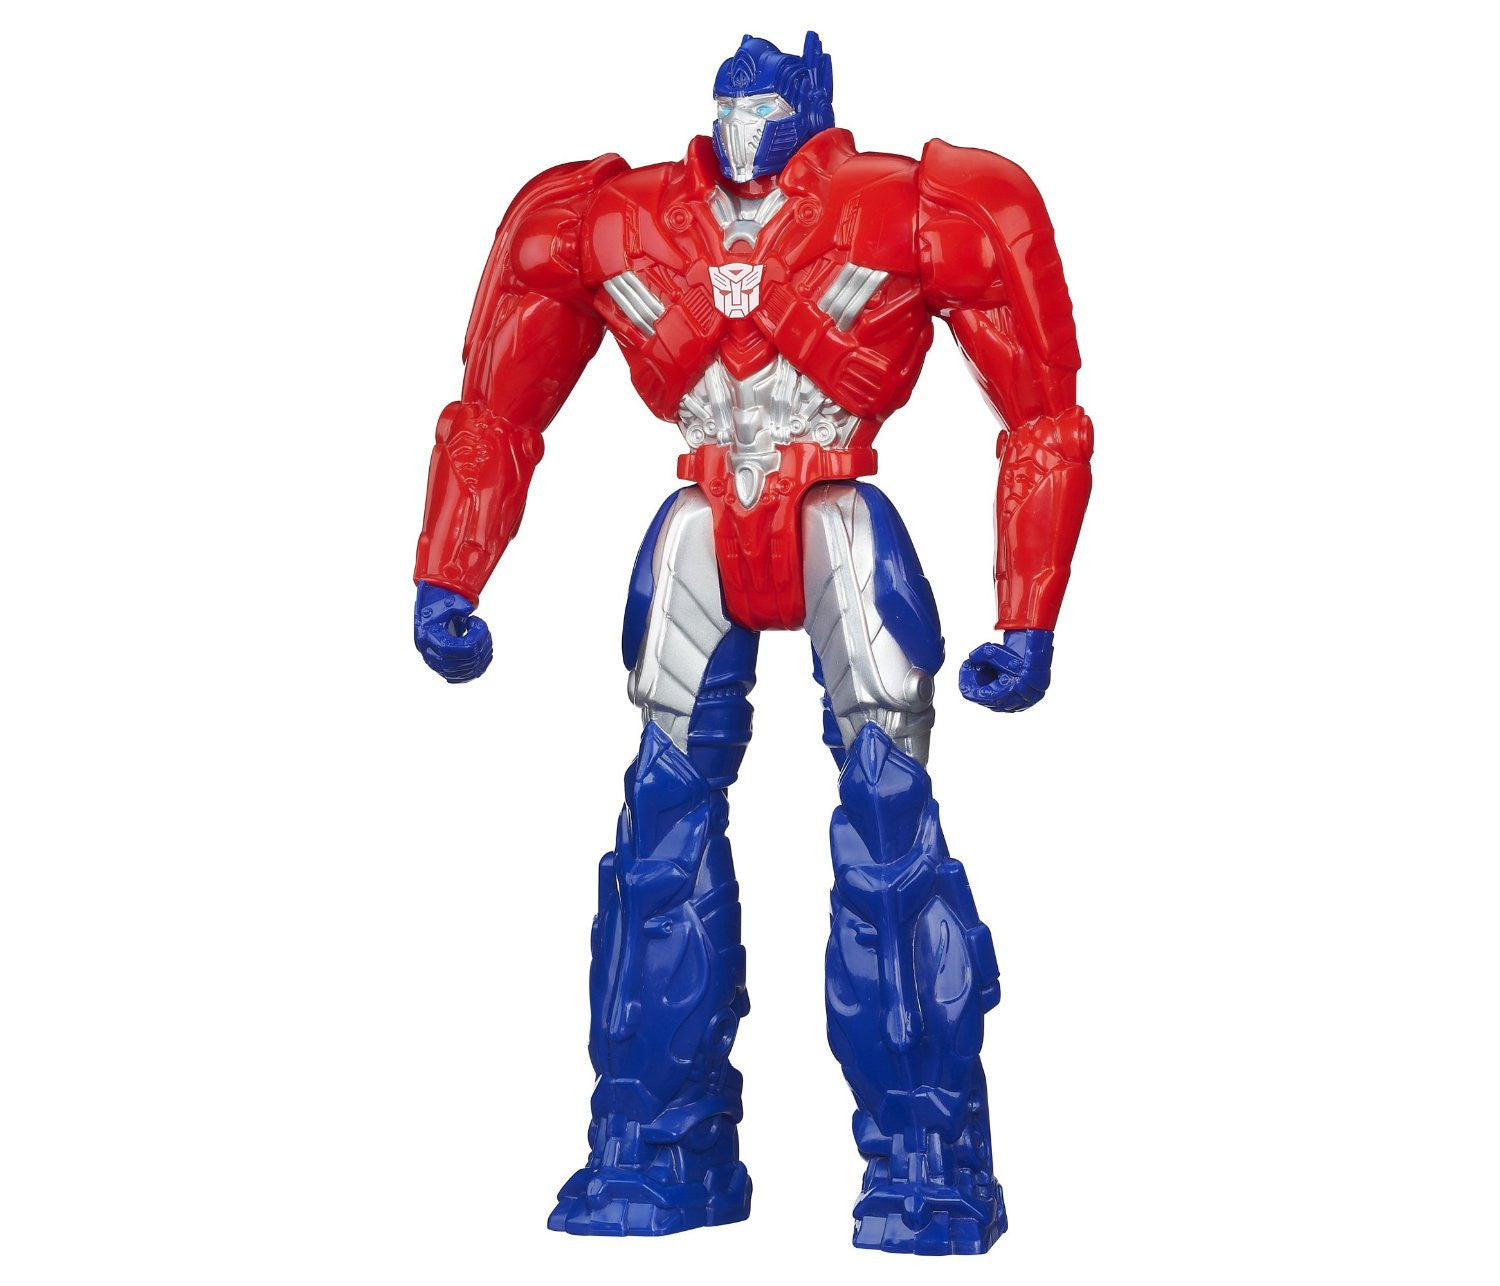 Transformers Age of Extinction Optimus Prime 12-Inch Figure